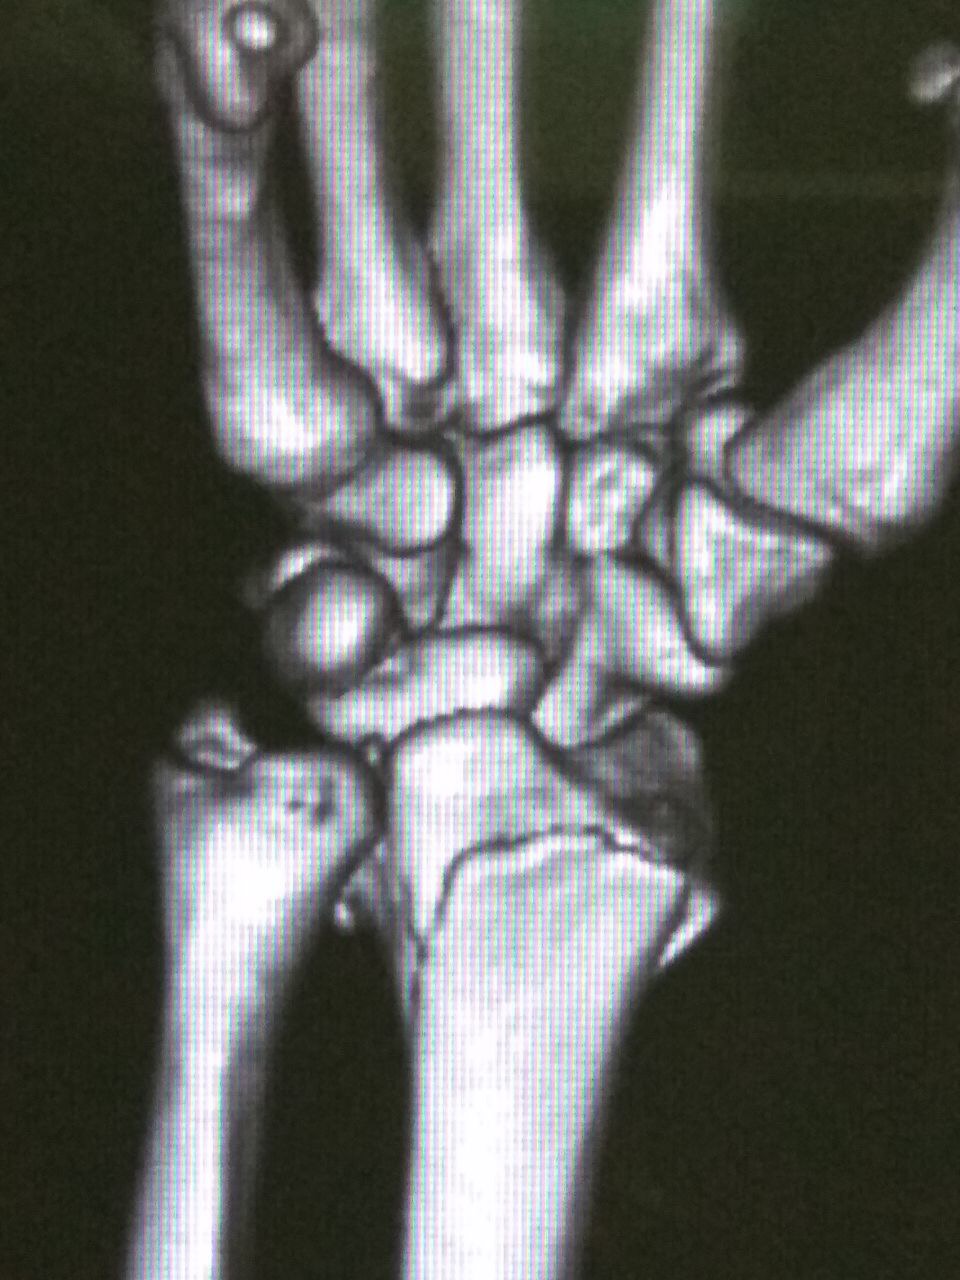 File:CT scan wrist ventral view.JPG